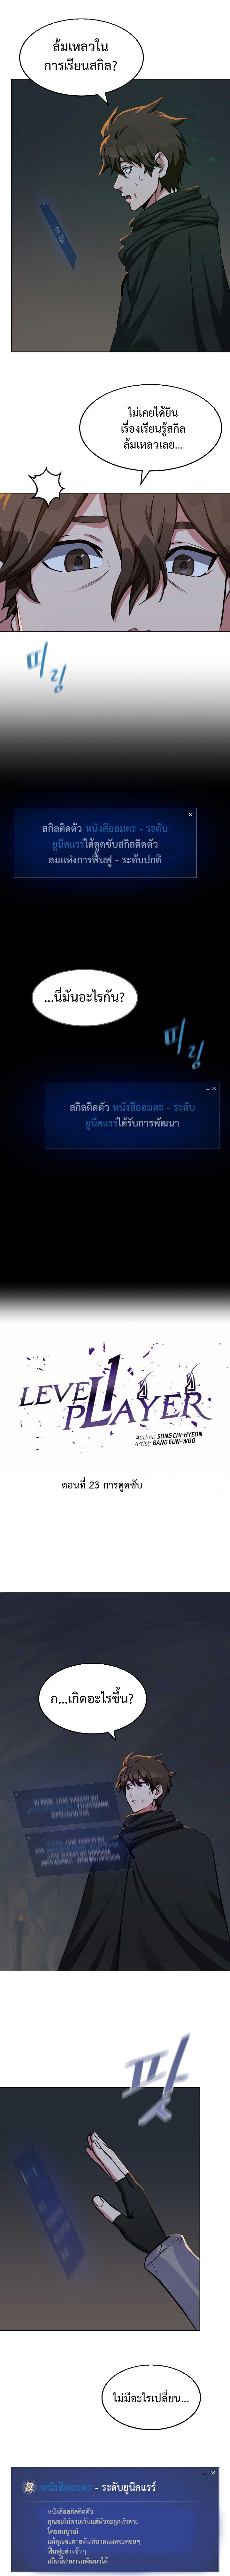 Level 1 Player 23 (4)